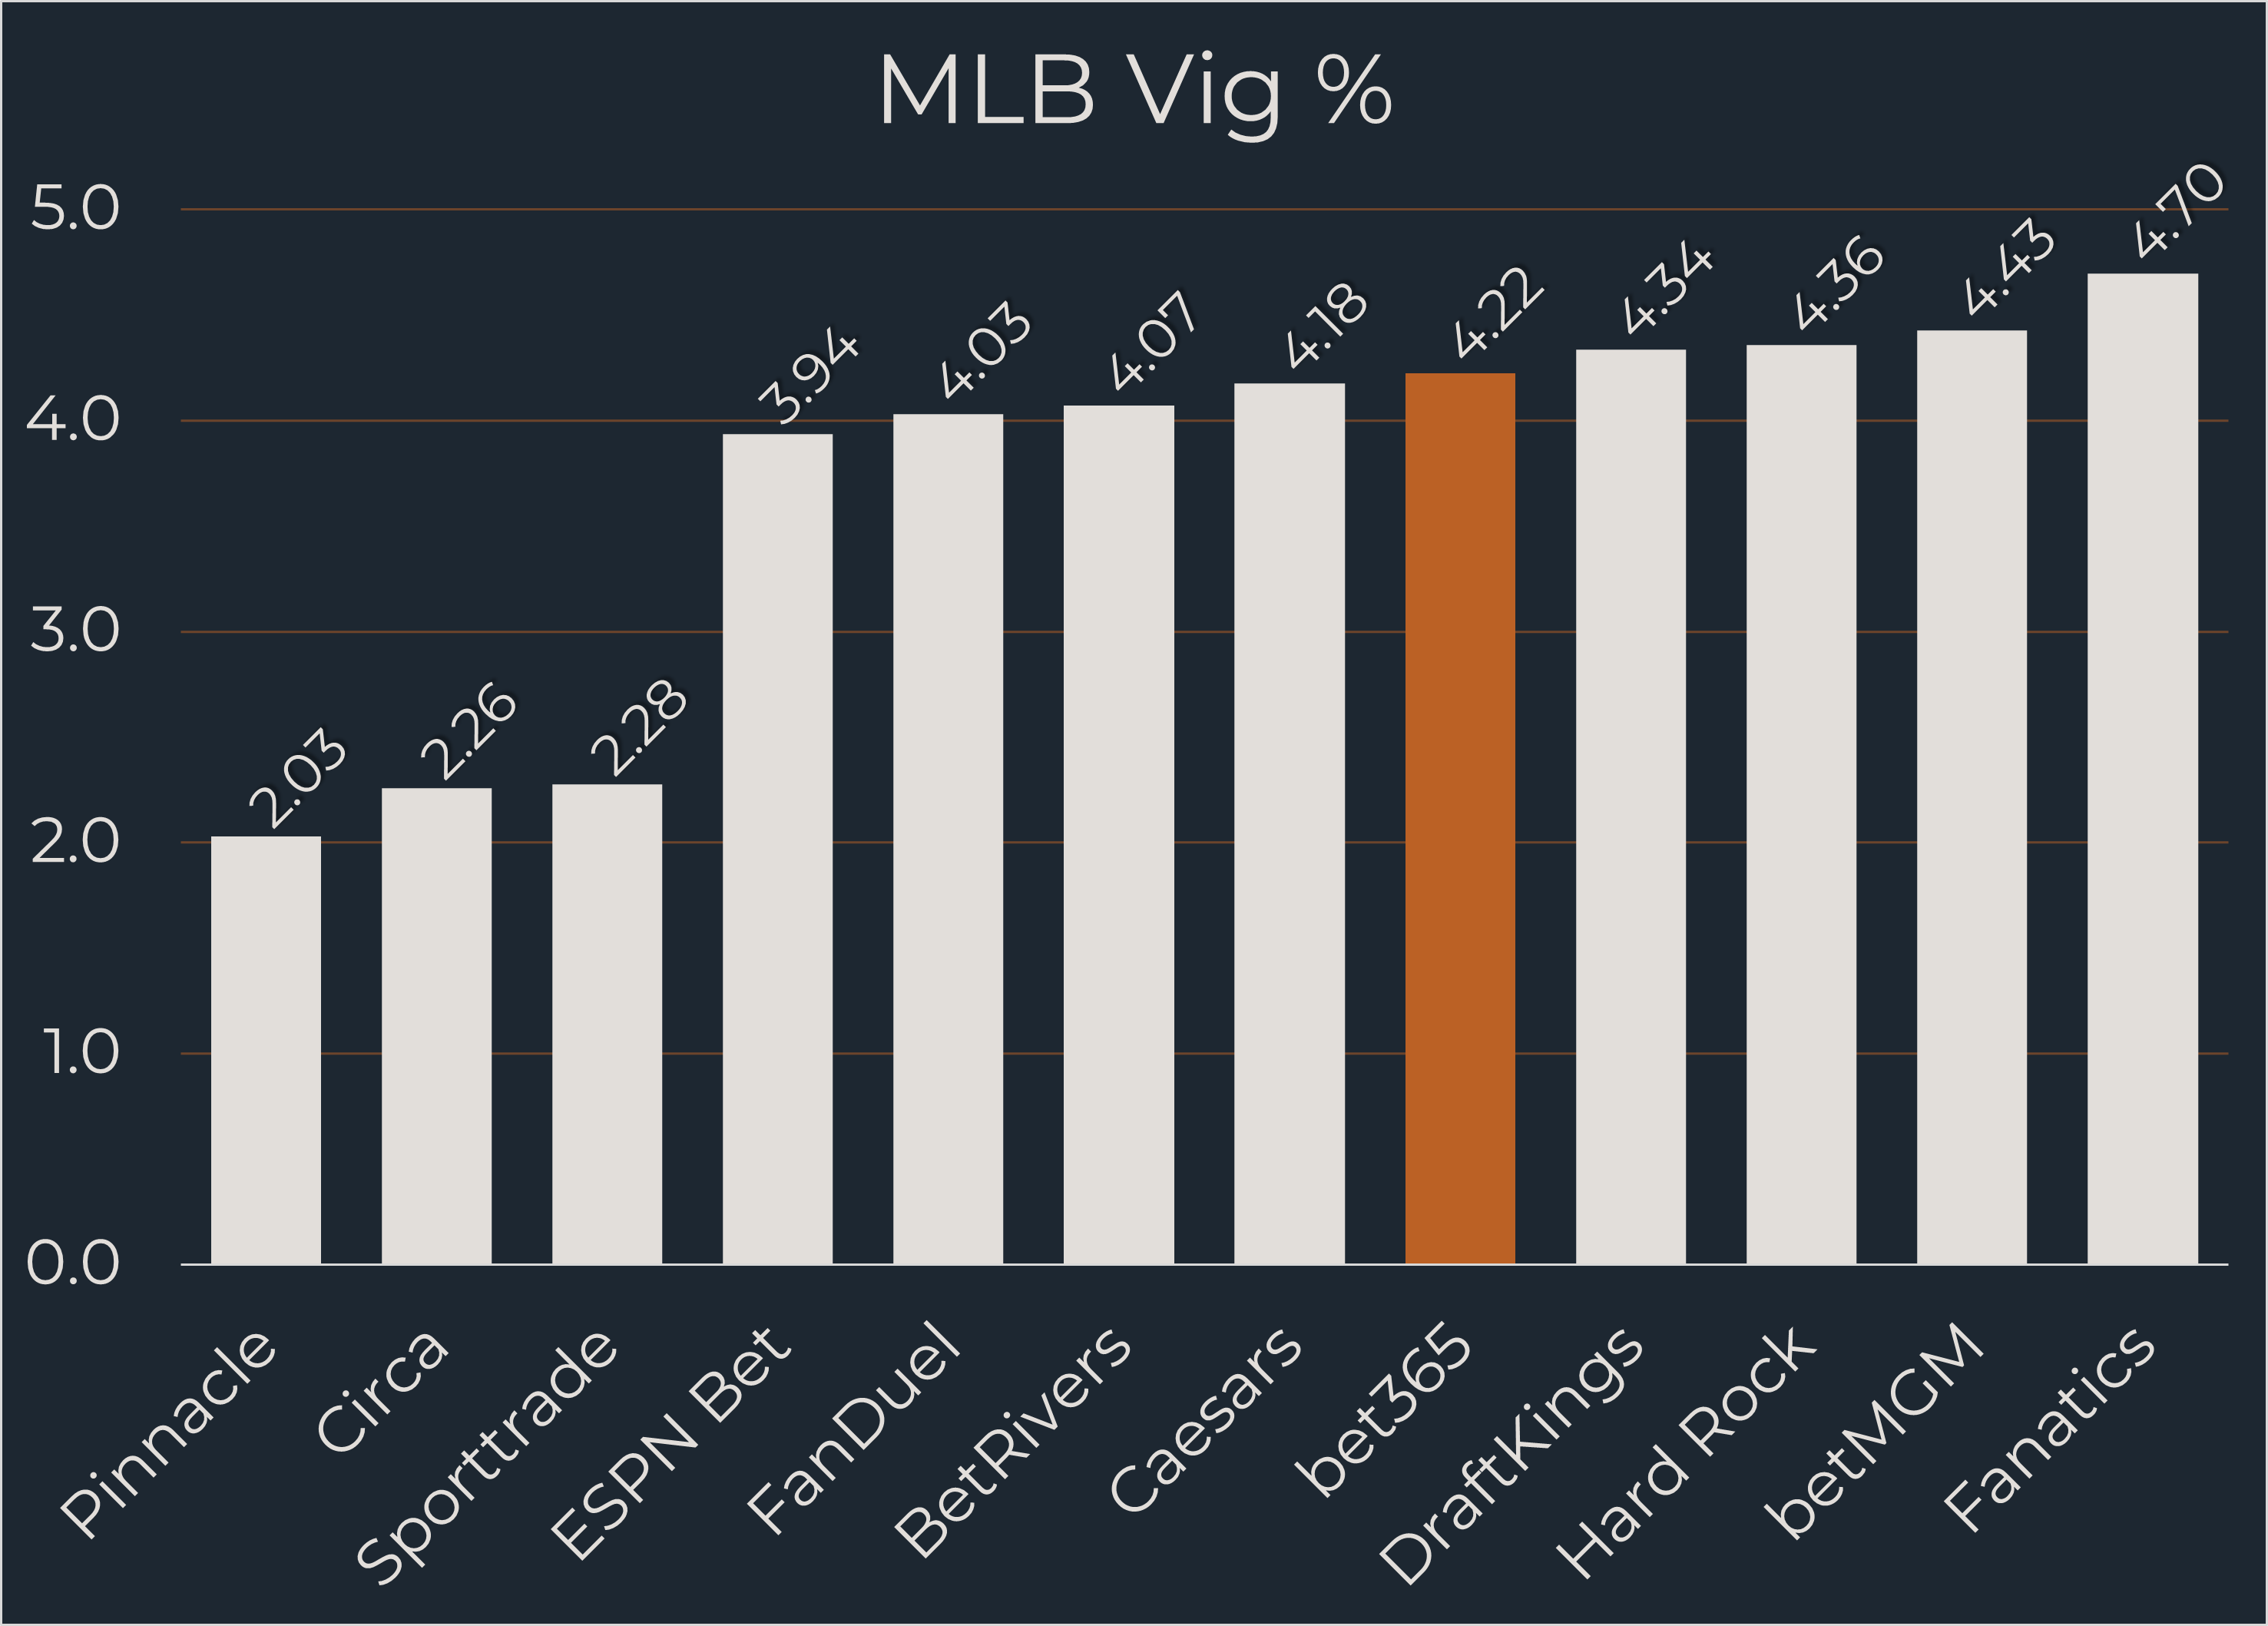 bet365 MLB Odds comparison chart